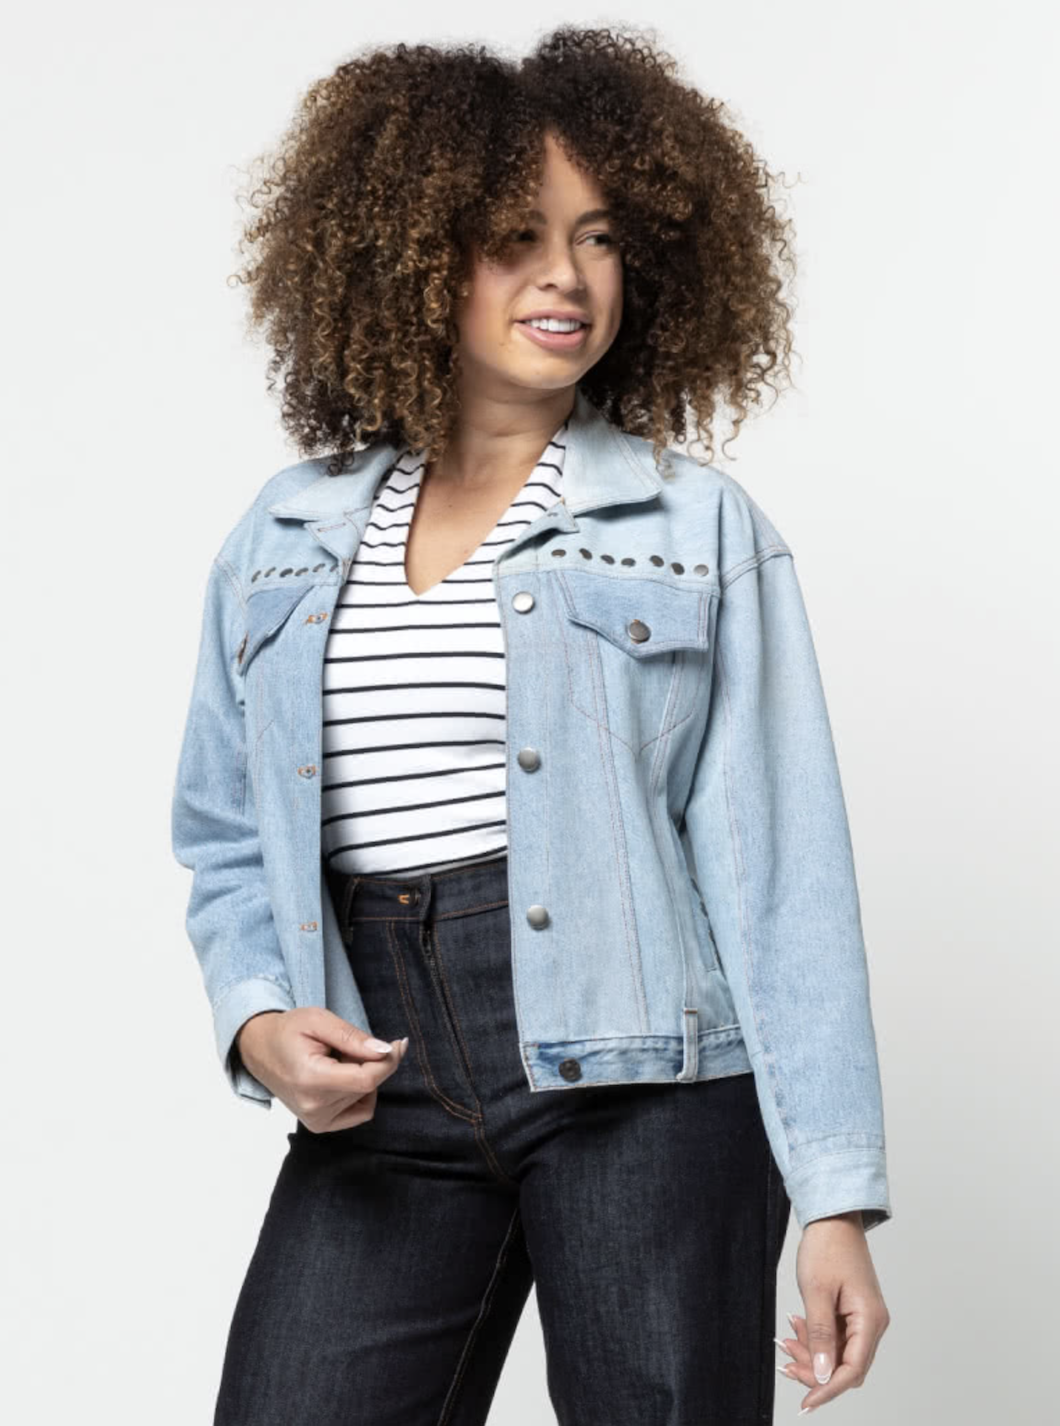 Women's Denim Jackets, Shop our trendy styles